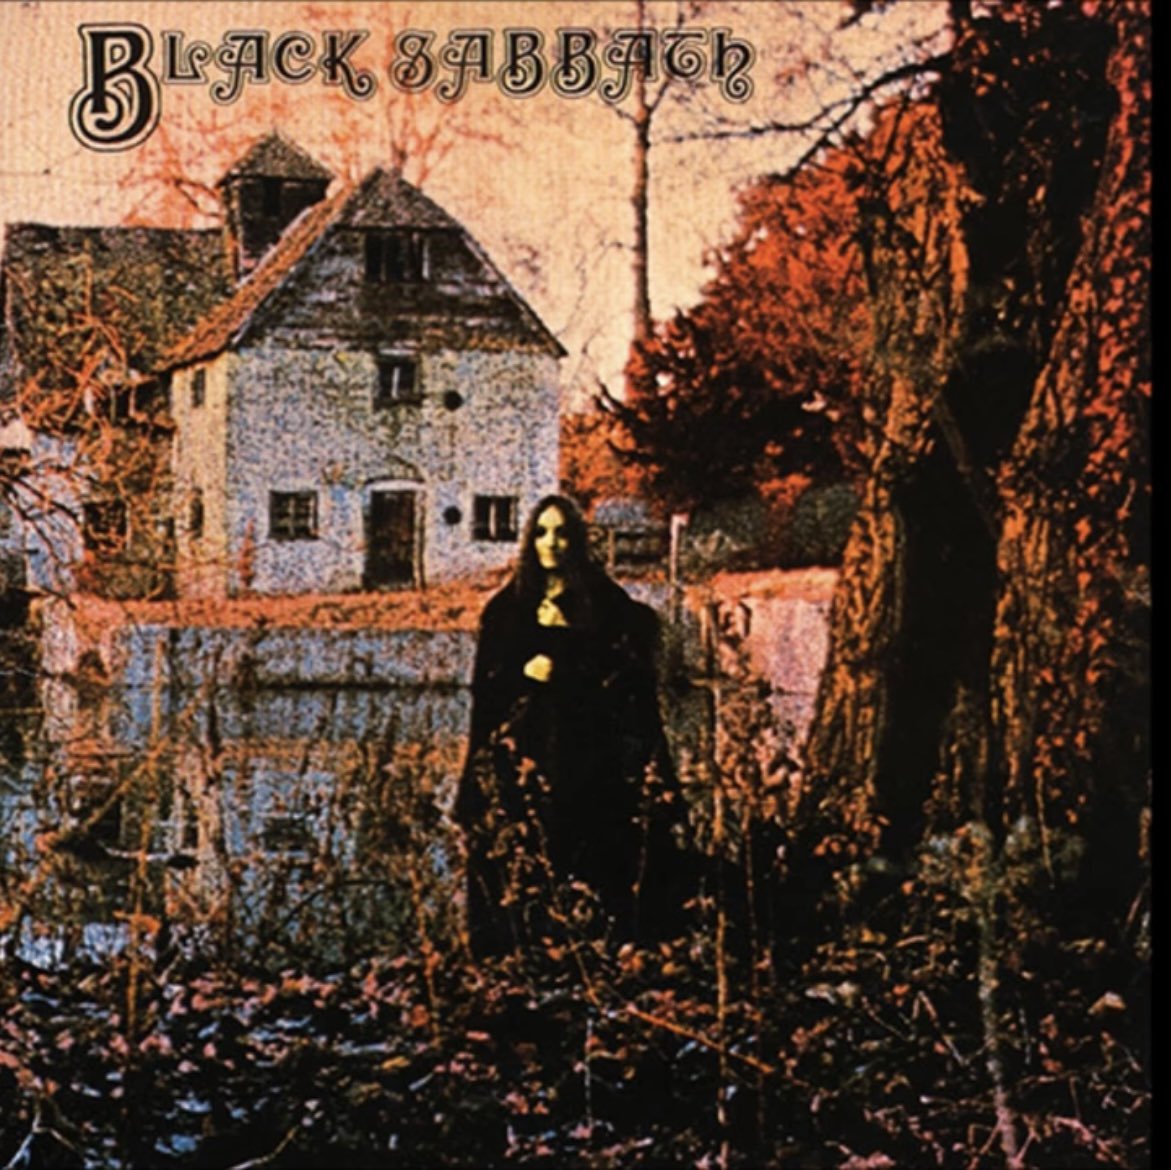 #Top10AlbumOneTrackOne

2. Black Sabbath - Black Sabbath 

youtu.be/4hfzNKqsckw?si…